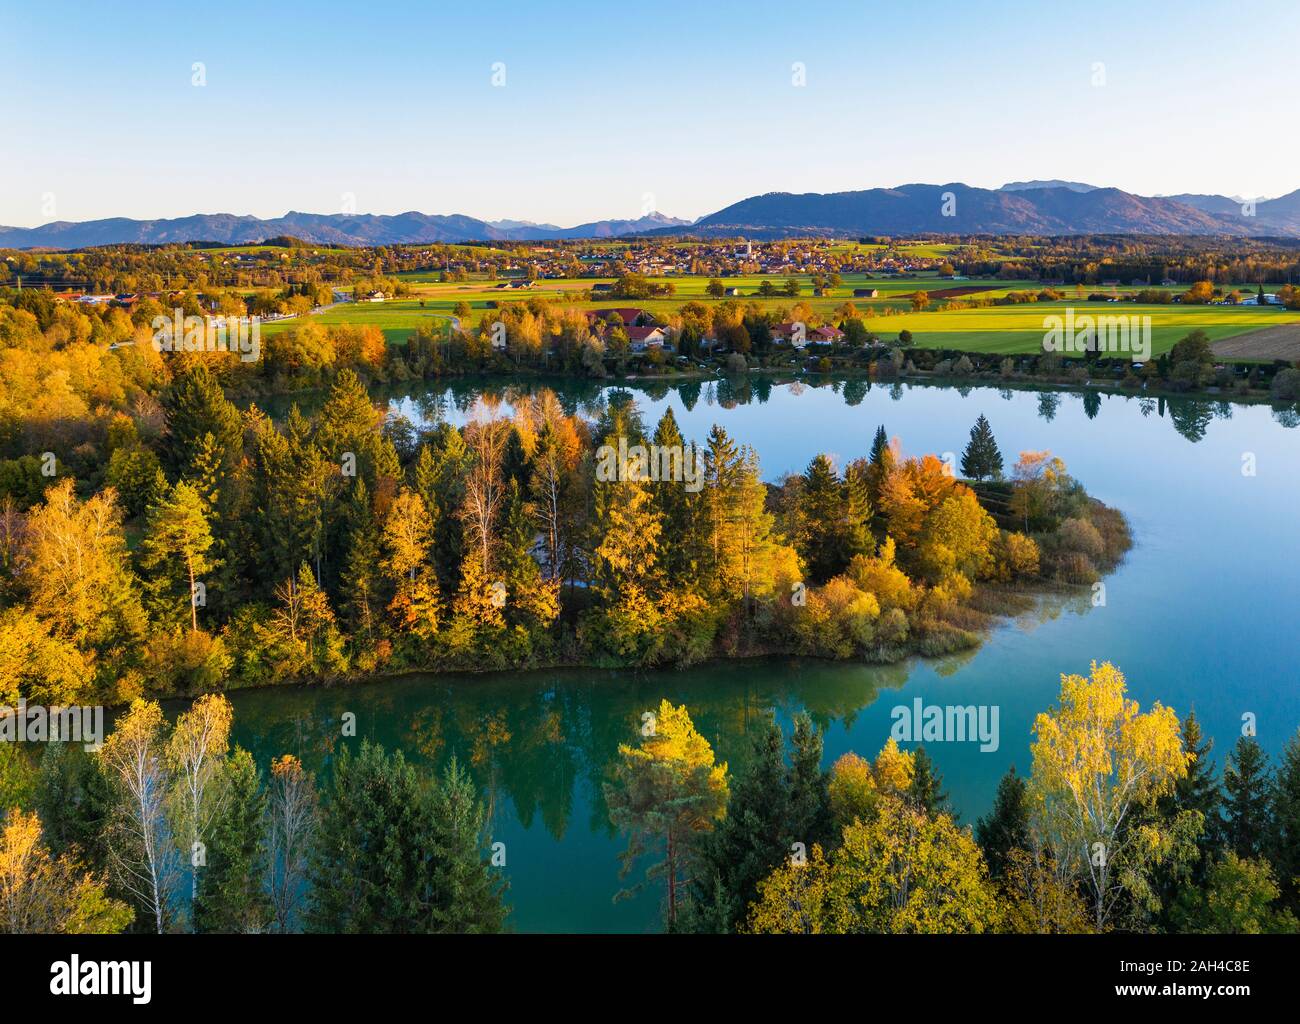 Allemagne, Berlin, Toelzer, terres Konigsdorf, vue aérienne des forêts et Baggersee en automne Banque D'Images